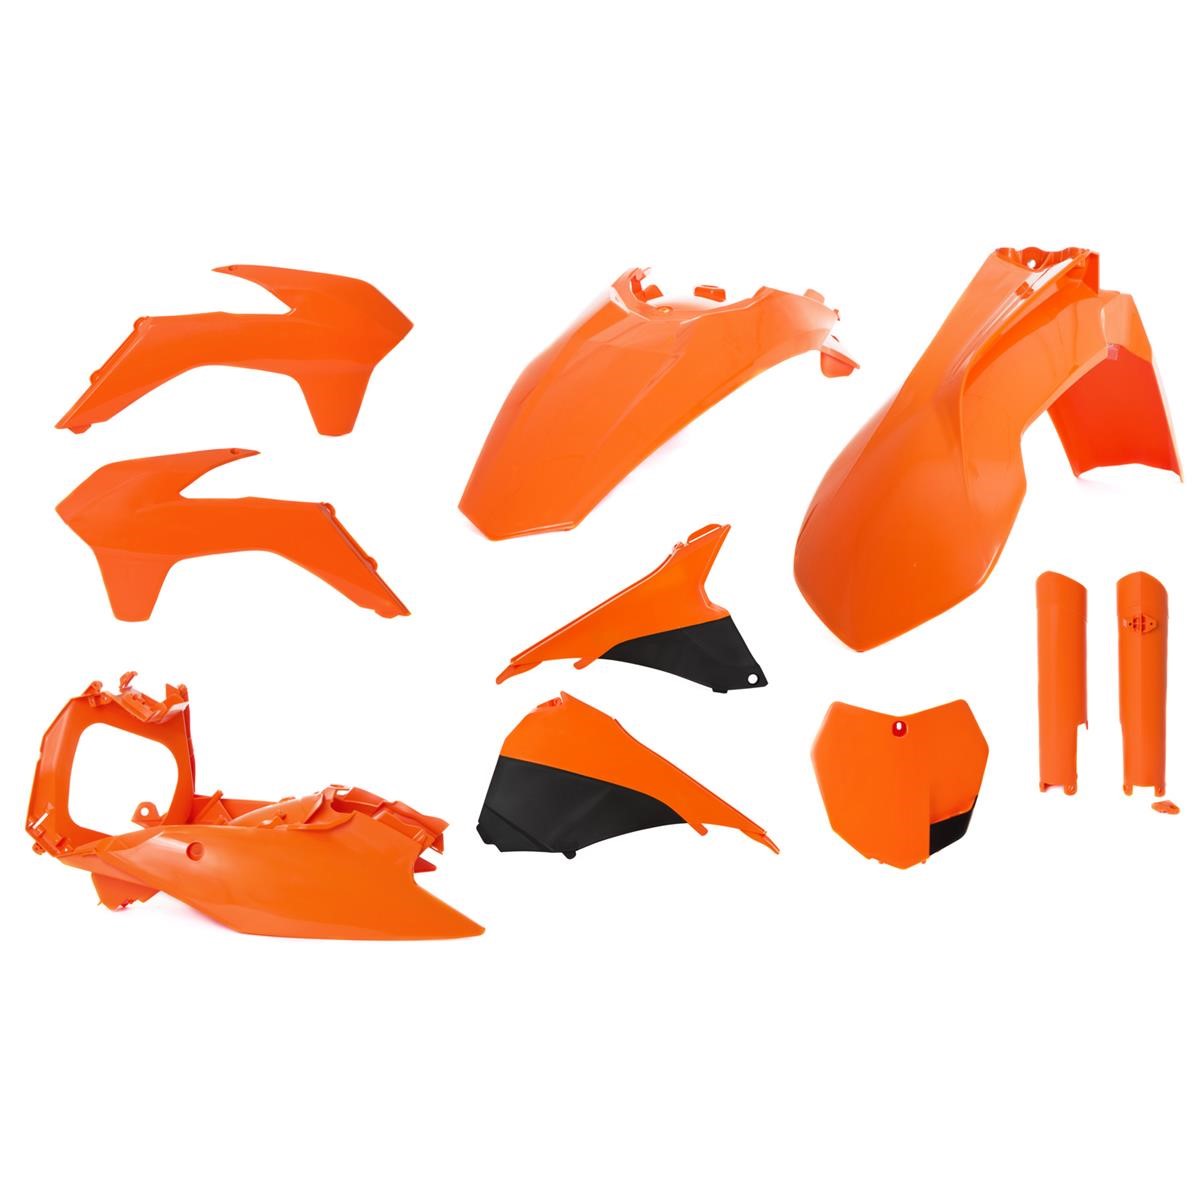 Acerbis Kit Plastique complet Full-Kit KTM SX 125/150/250 13-14 / SX-F 13-14, Orange